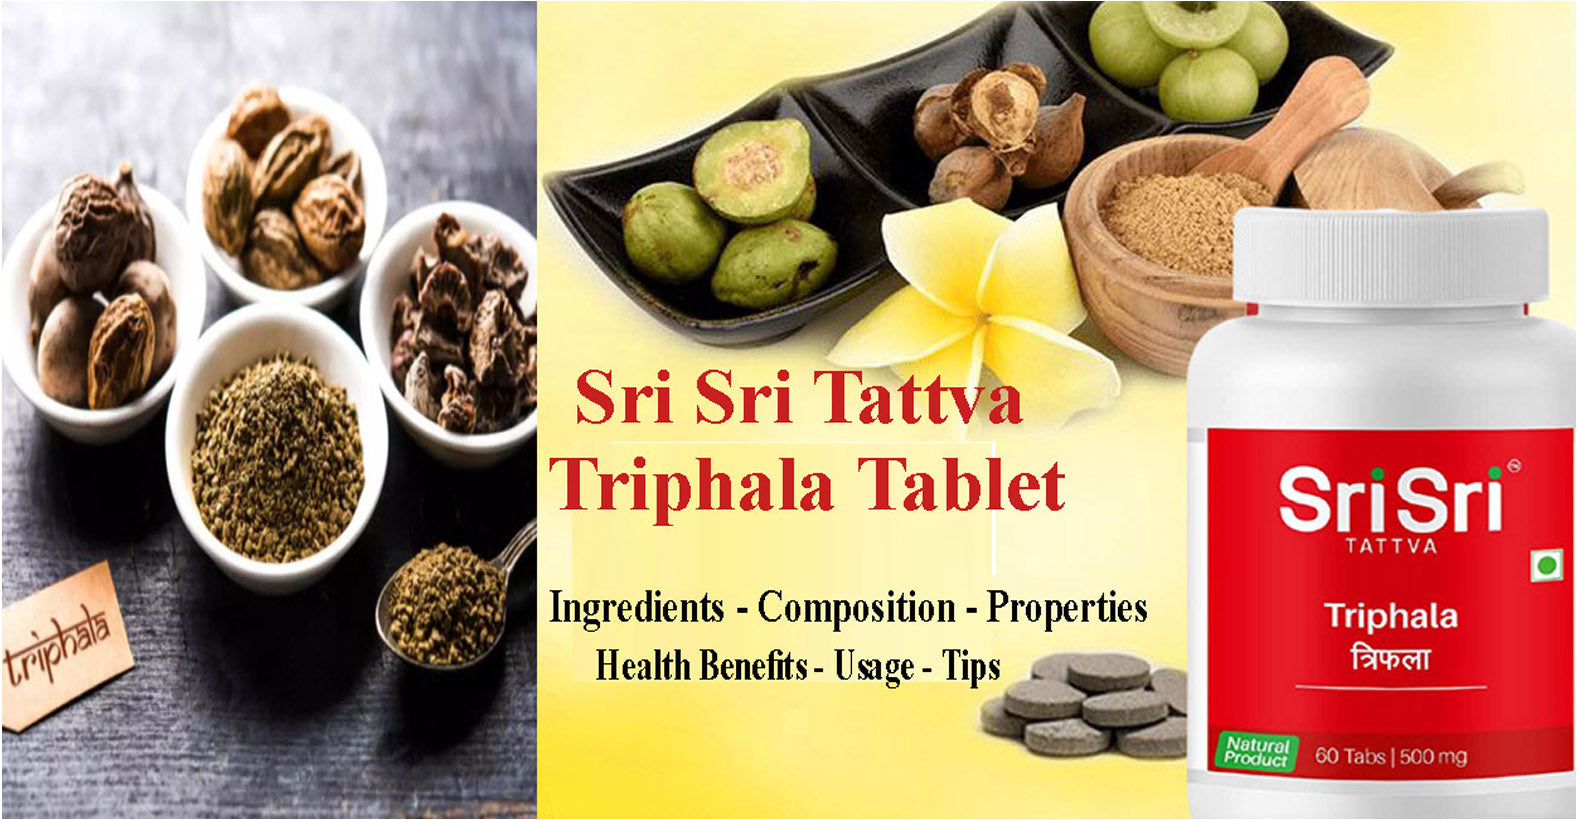 Sri Sri Tattva Triphala Tablets- Ingredients, Composition, Properties, Health Benefits, Usage, Tips